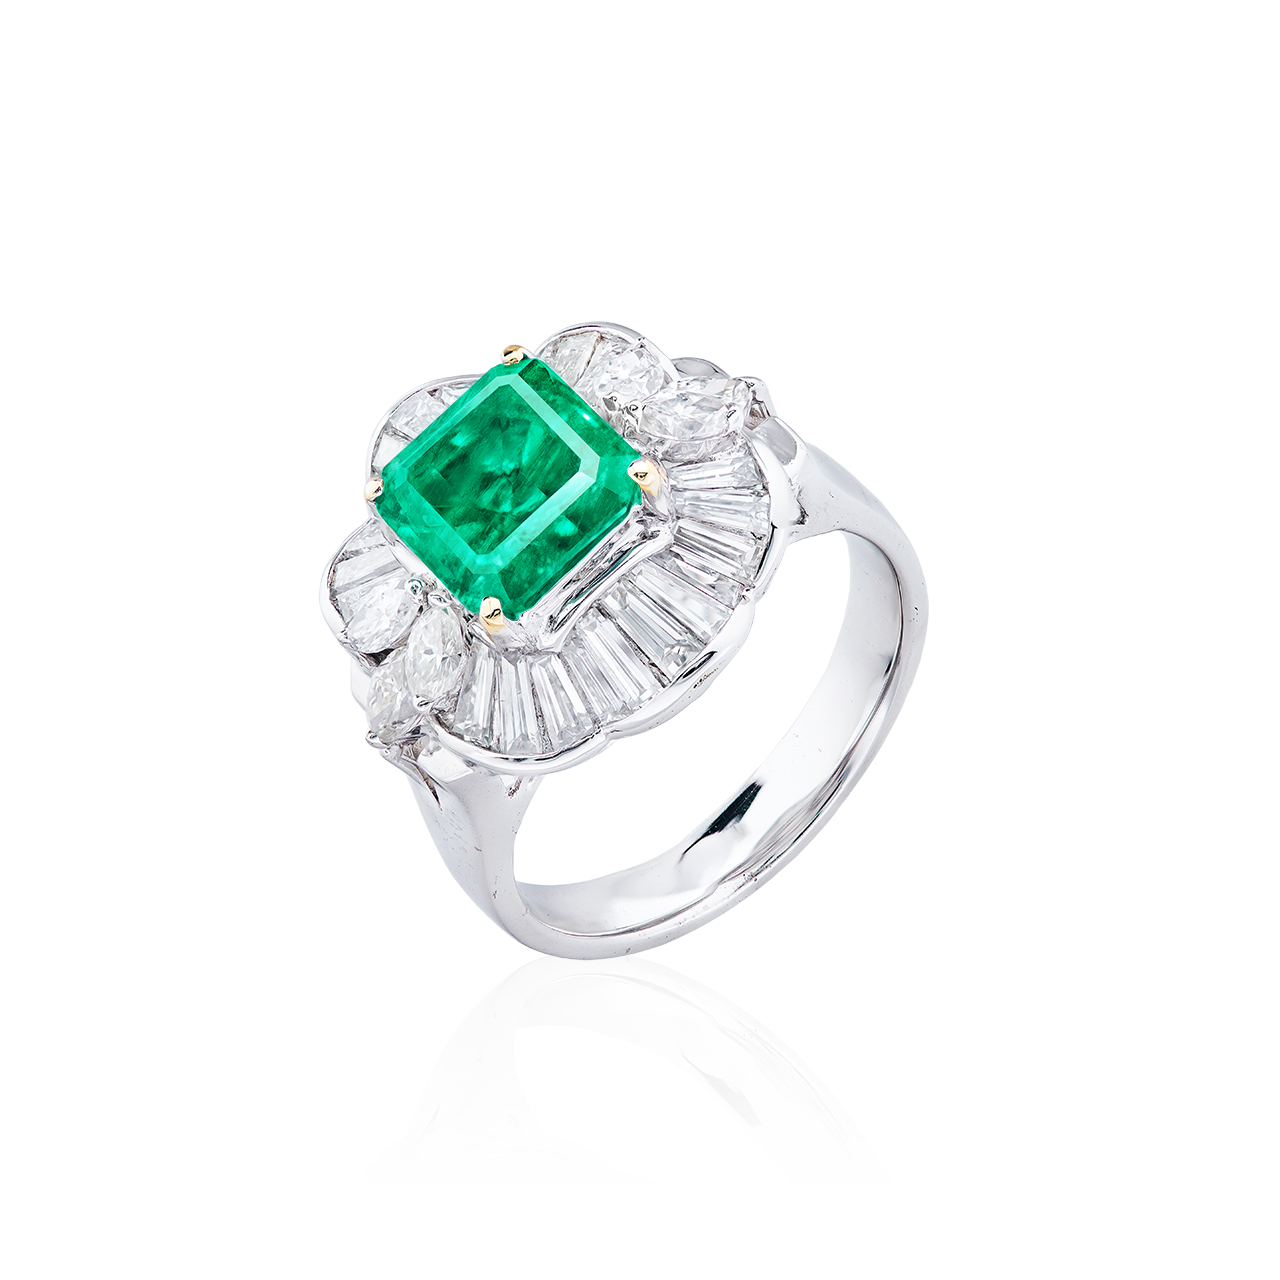 2.347克拉 哥倫比亞艷彩祖母綠鑽戒
Colombian Vivid Green Emerald 
and Diamond Ring